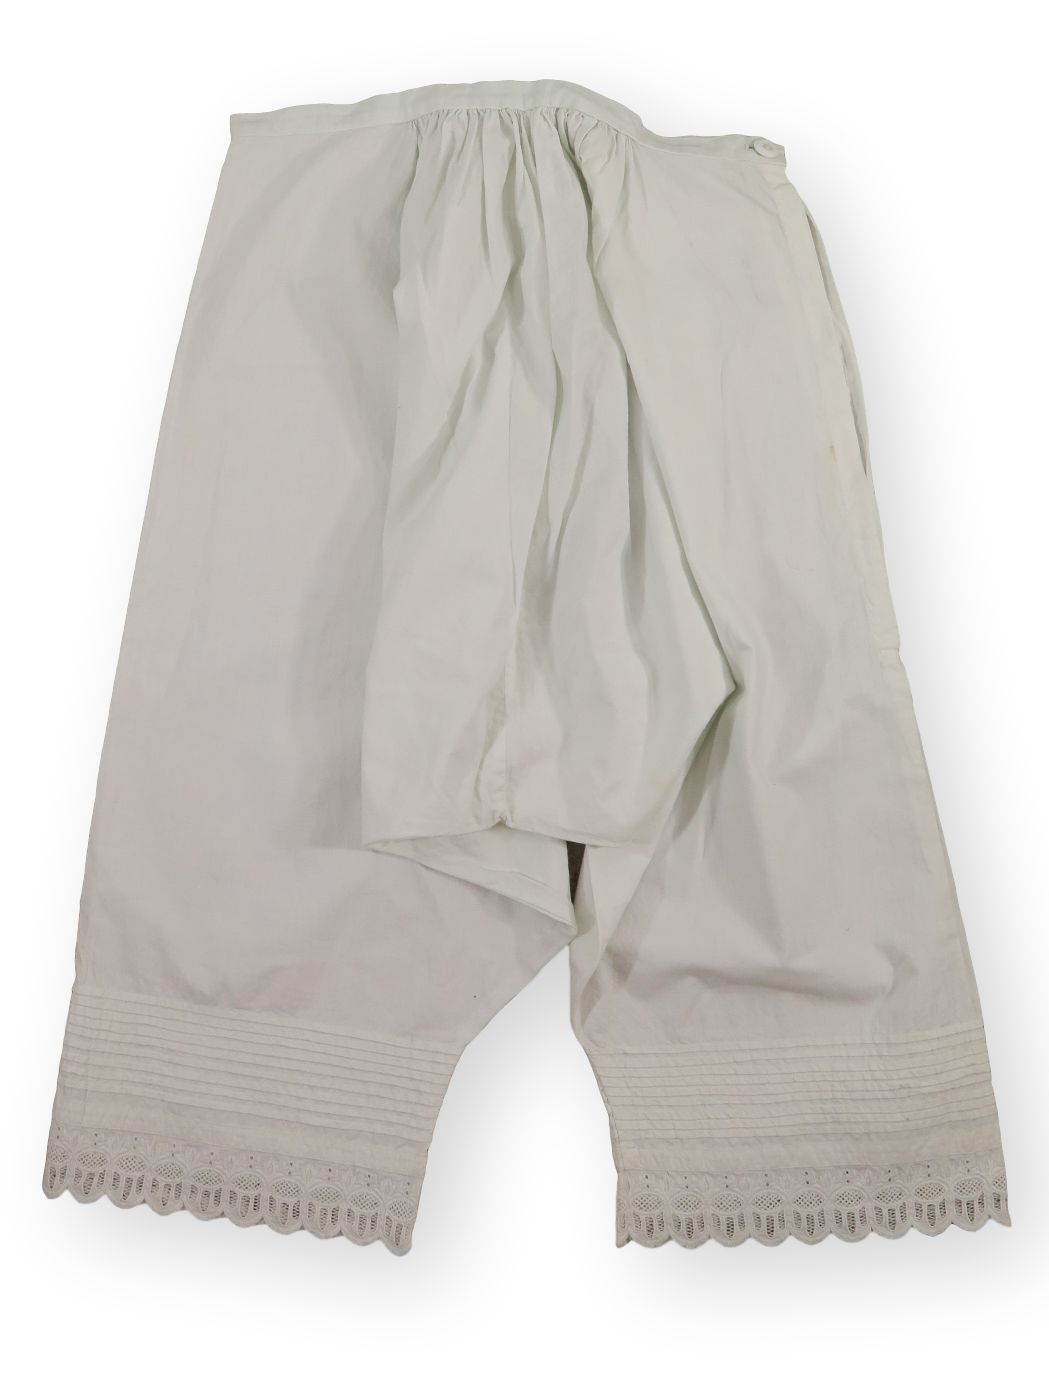 Antique Drawers or Pantaloons Victorian Edwardian Underwear - sm